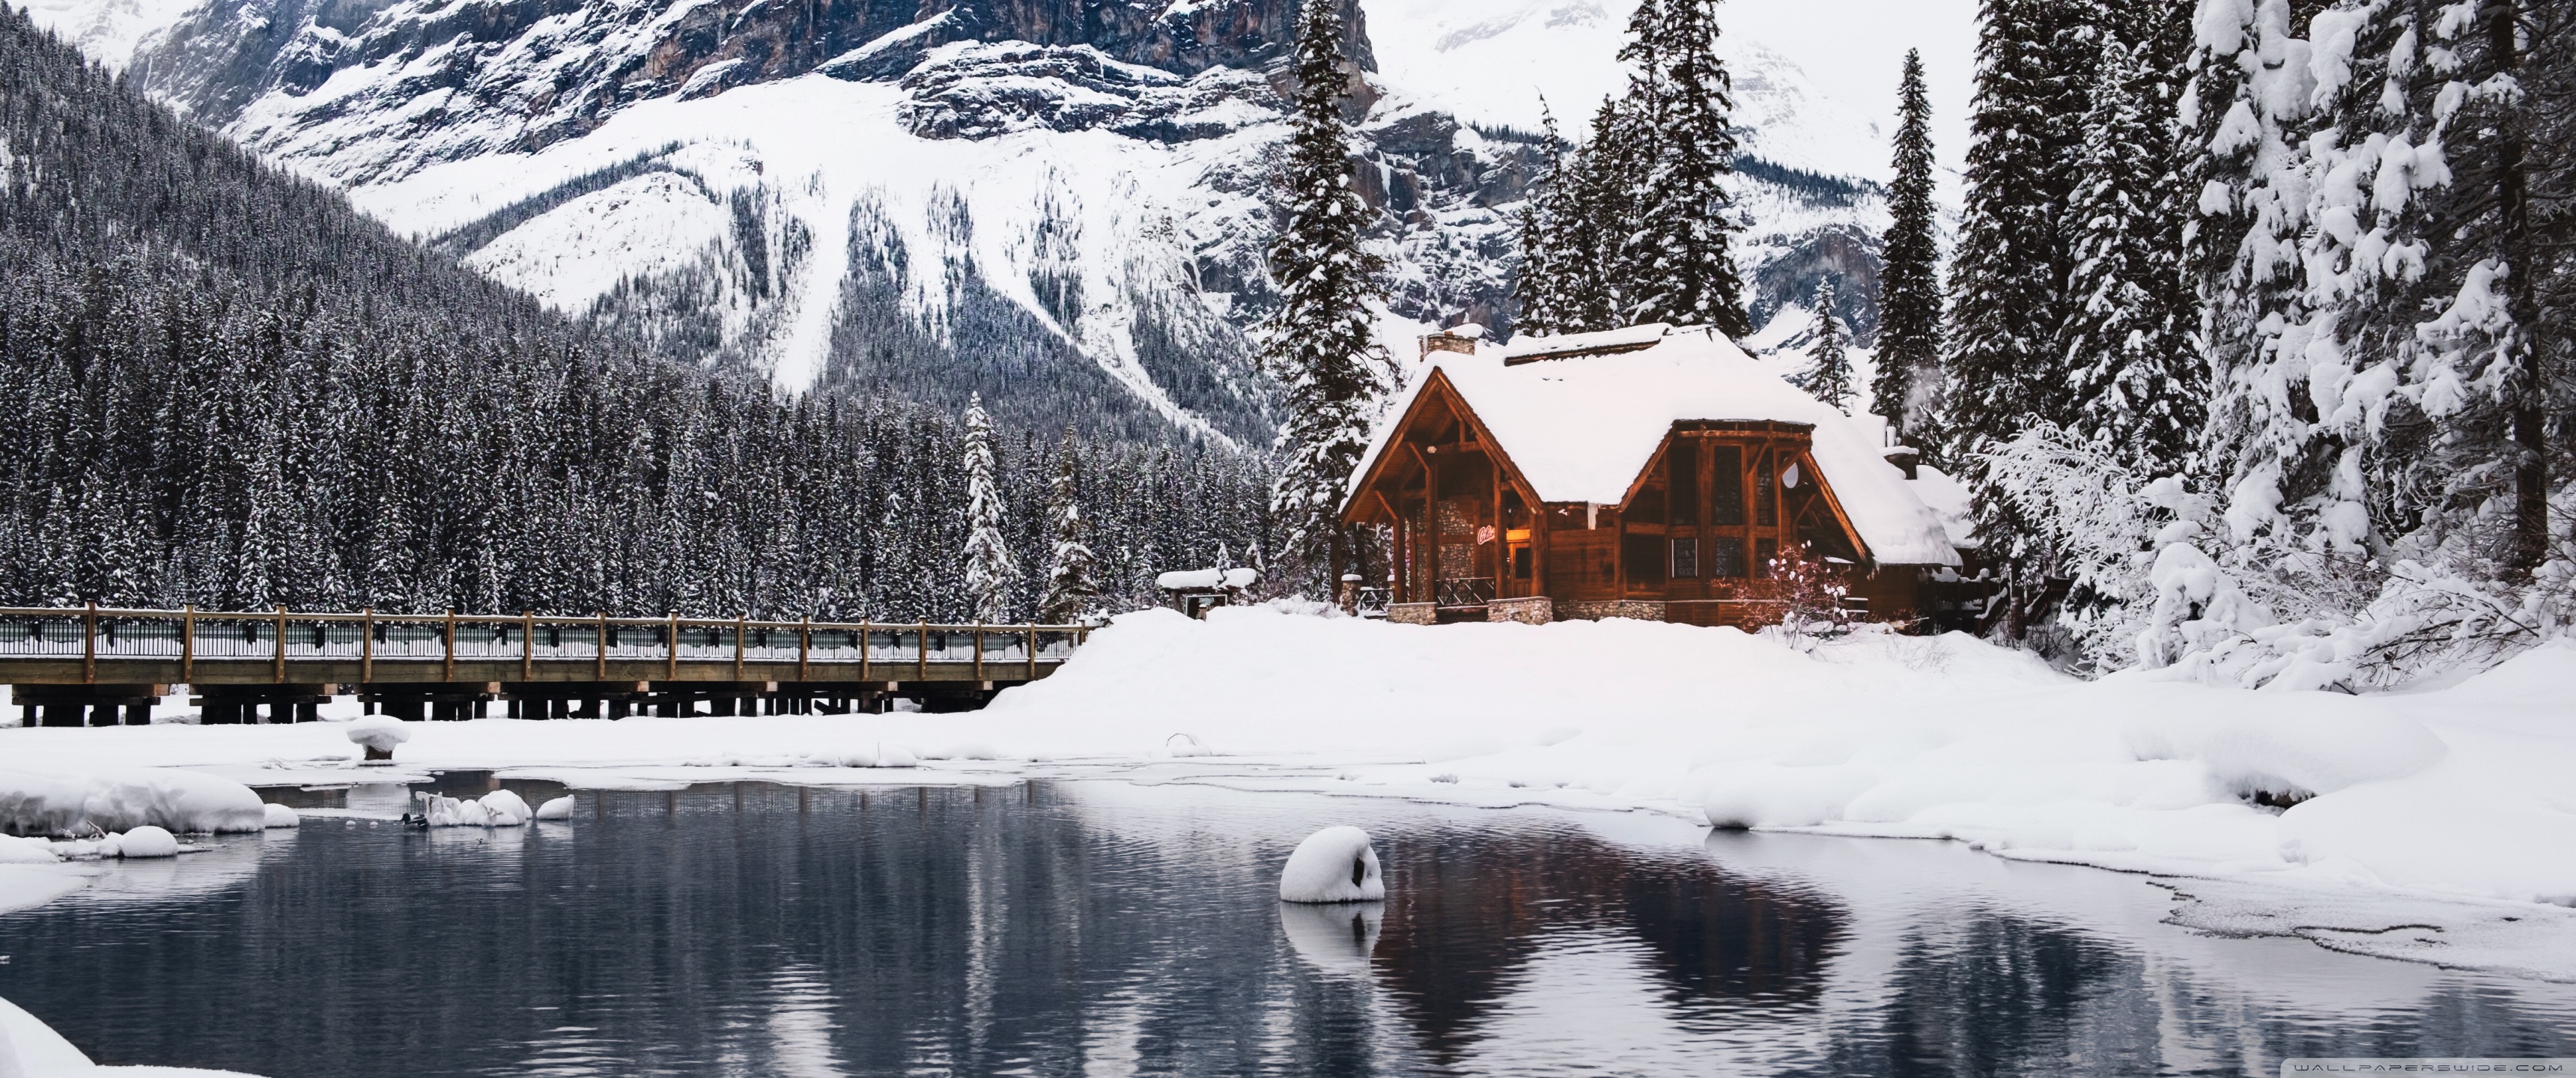 Rustic Cottage, Lake, Mountain, Winter, Snow Ultra HD Desktop Background Wallpaper for 4K UHD TV, Widescreen & UltraWide Desktop & Laptop, Tablet